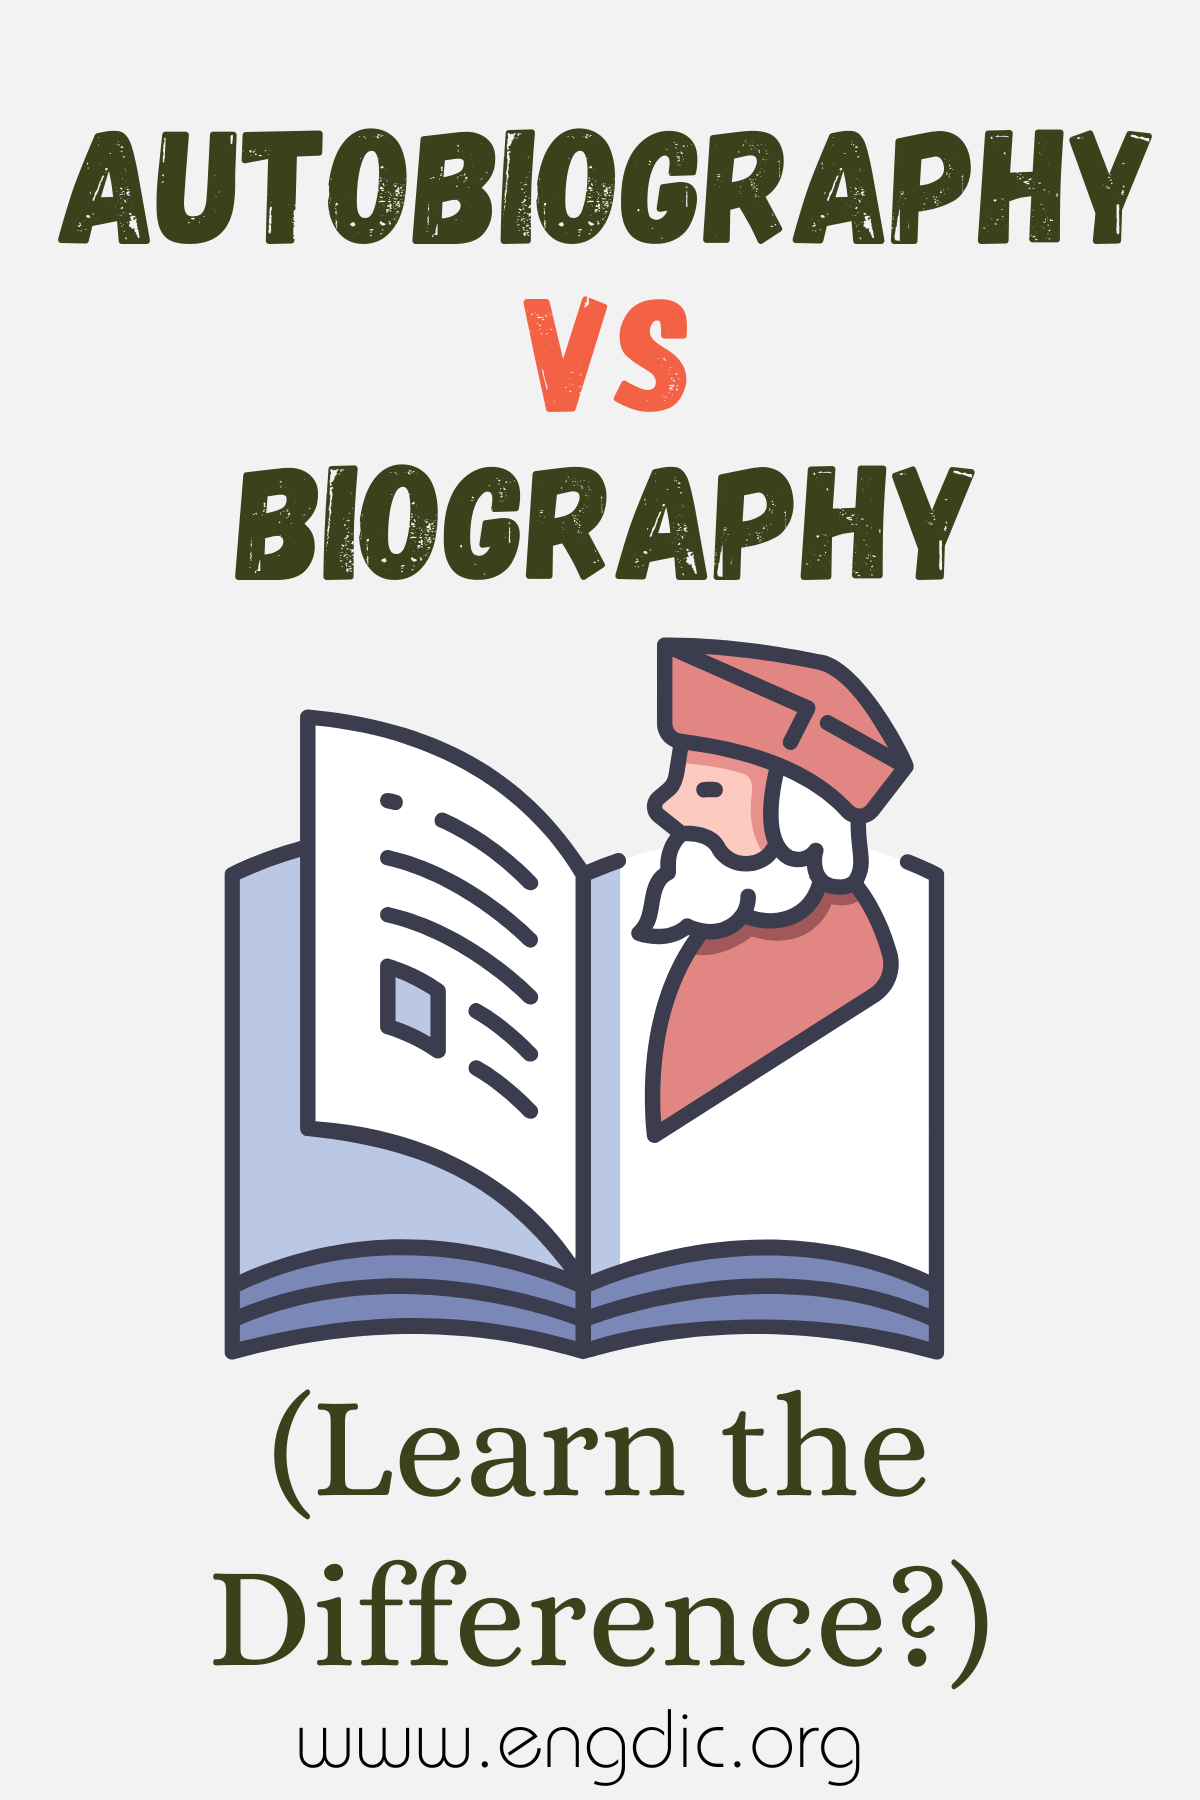 Autobiography vs Biography